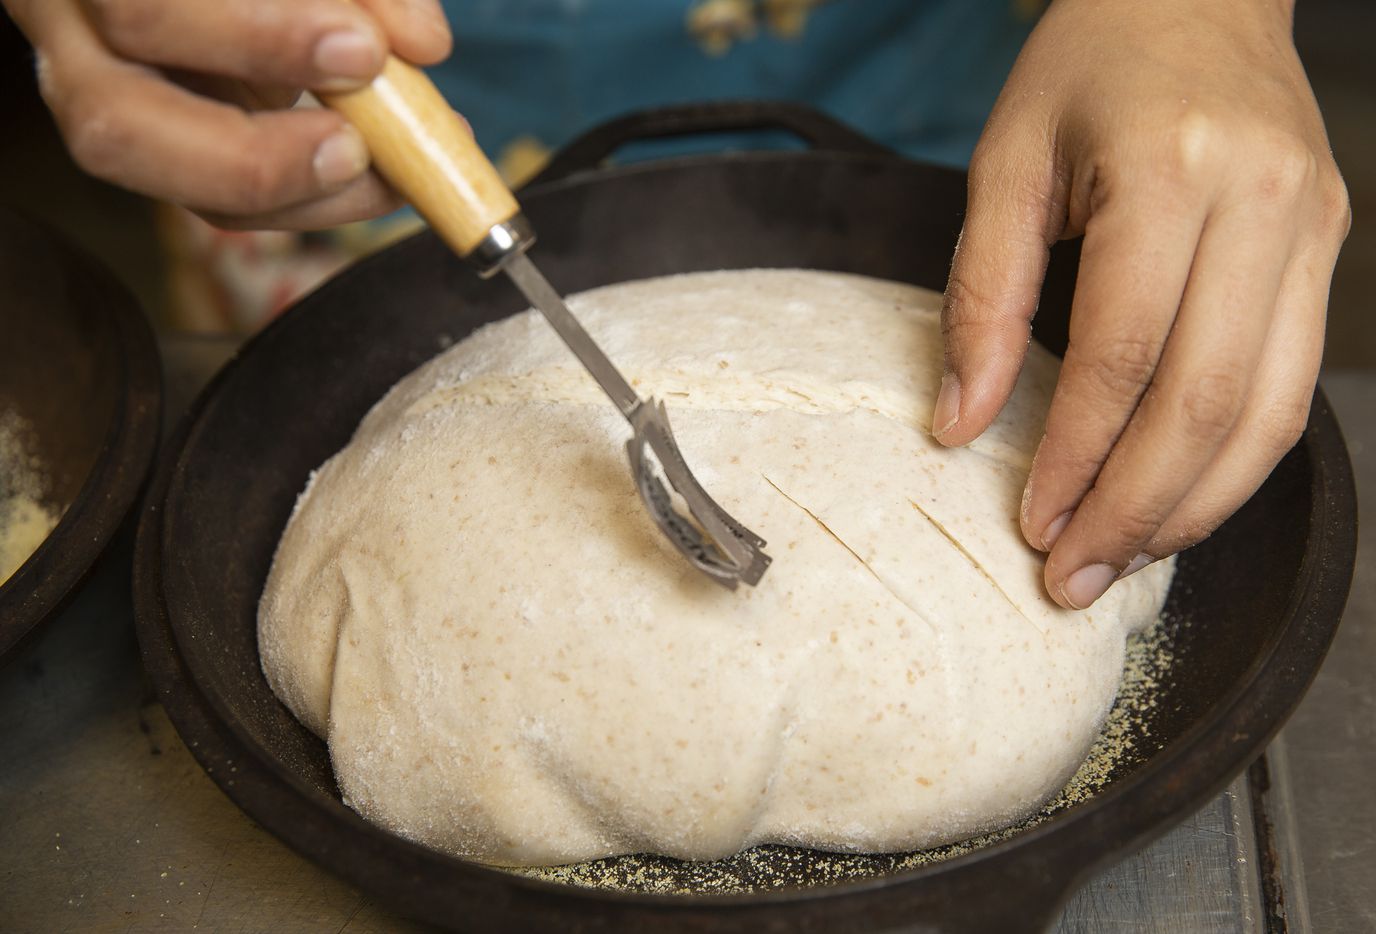 Co-owner Maricsa Trejo knives the sourdough before baking at La Casita Bakeshop on Feb. 12,...